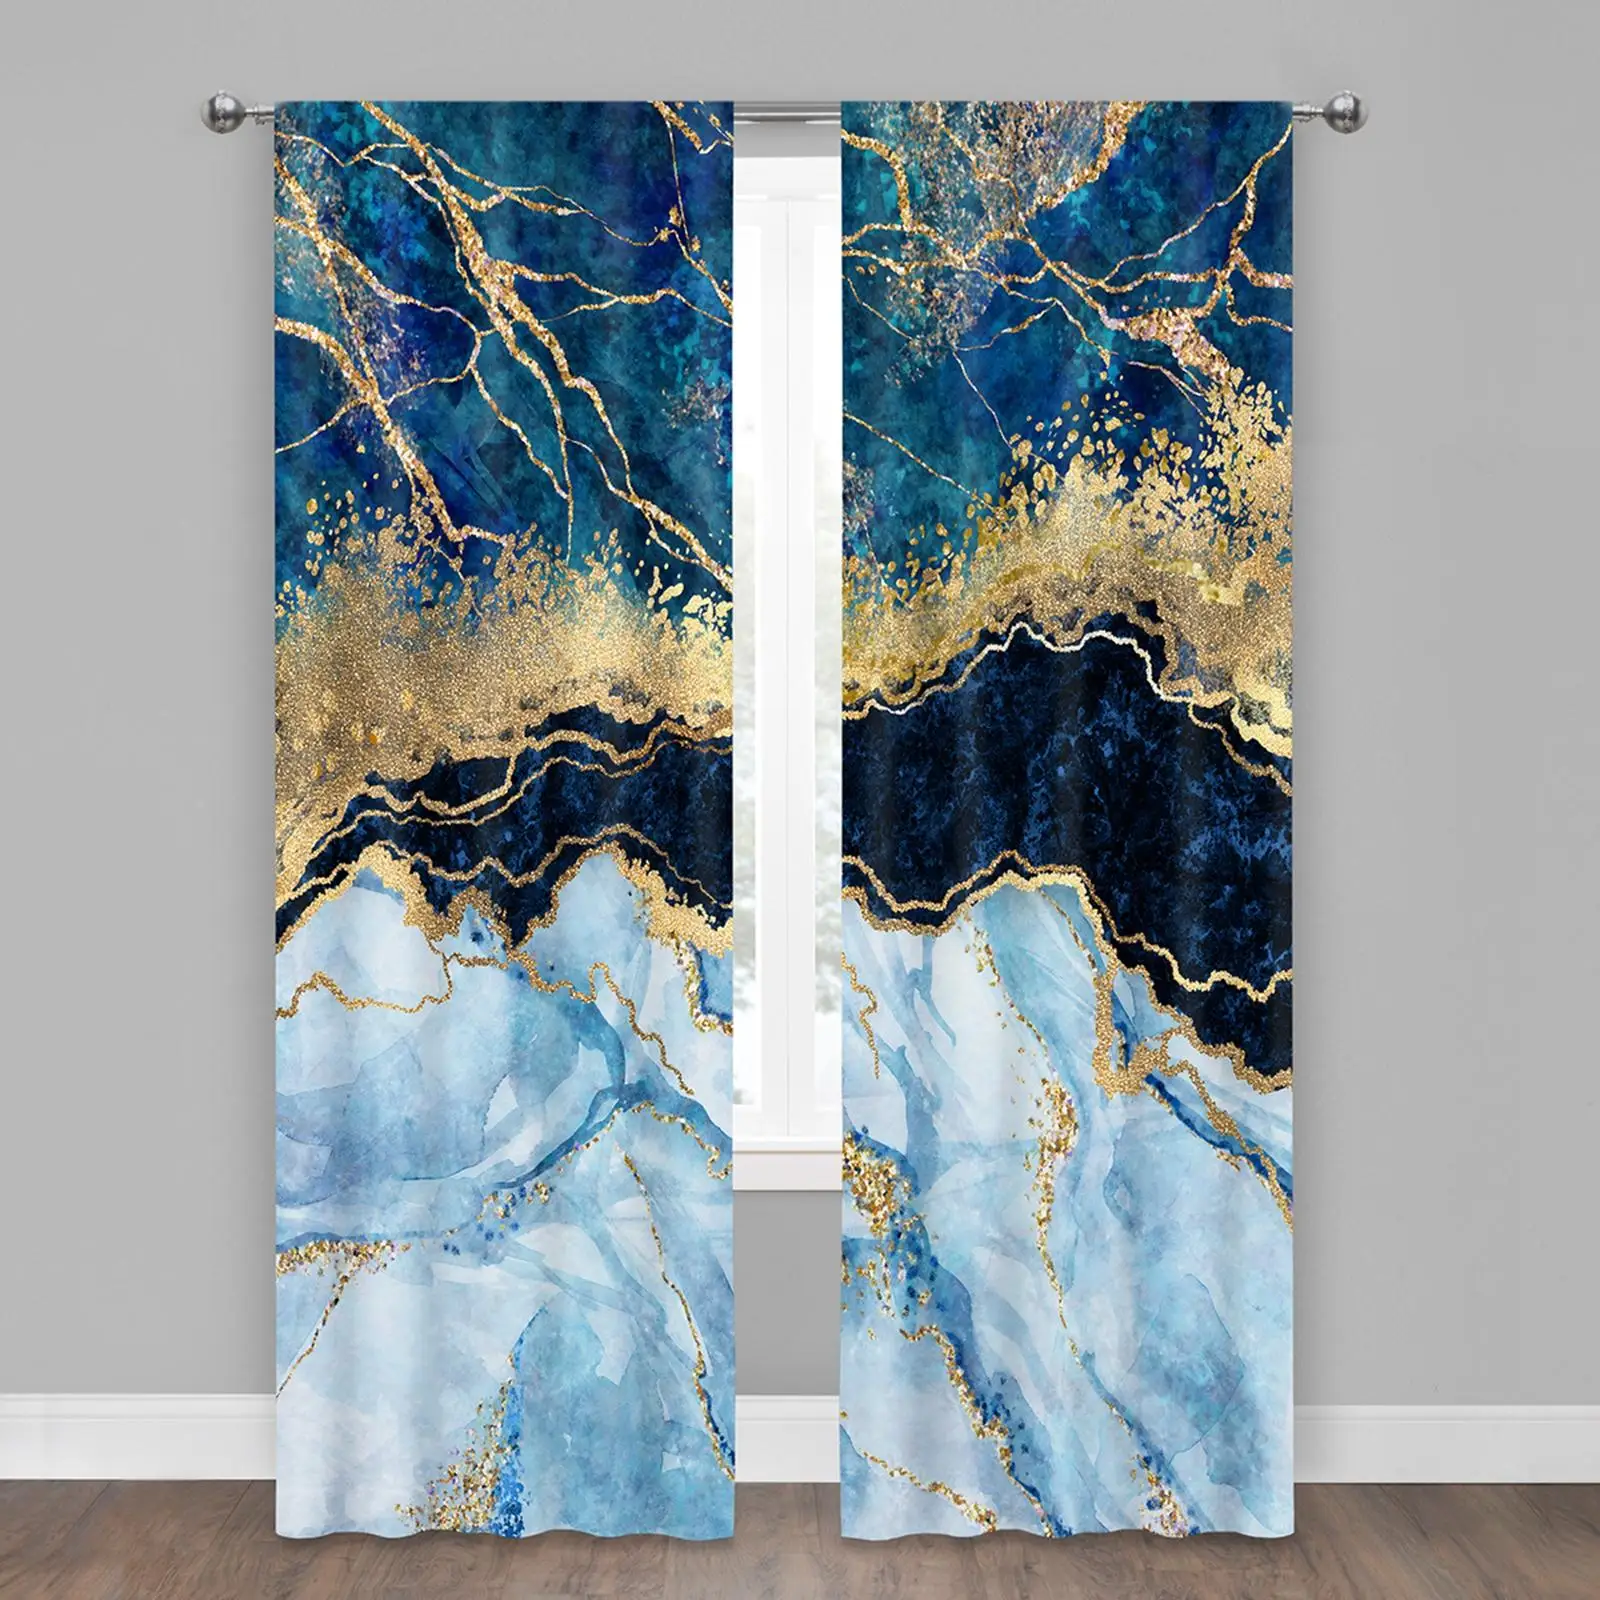 2x Polyester Curtain Panels Elegant Luxury Decorative Household Washable Window Treatment for Bathroom Bedroom Hotel Decoration